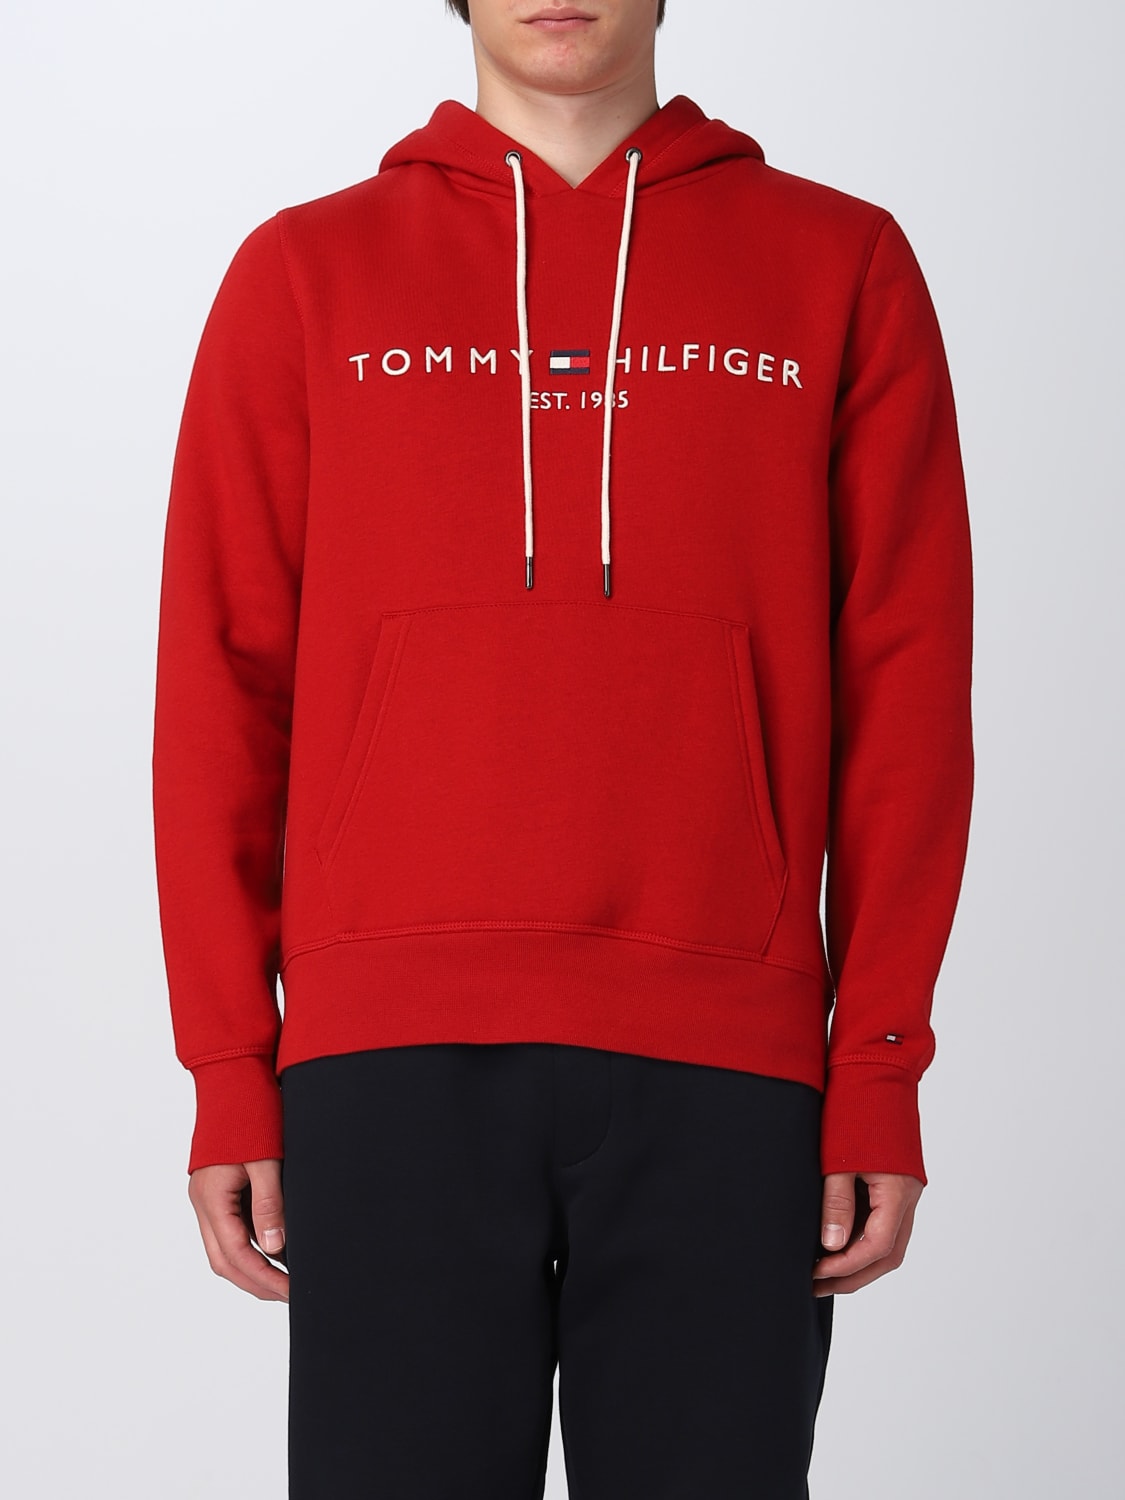 TOMMY HILFIGER: sweatshirt for man - Red | Tommy Hilfiger sweatshirt MW0MW11599 online GIGLIO.COM